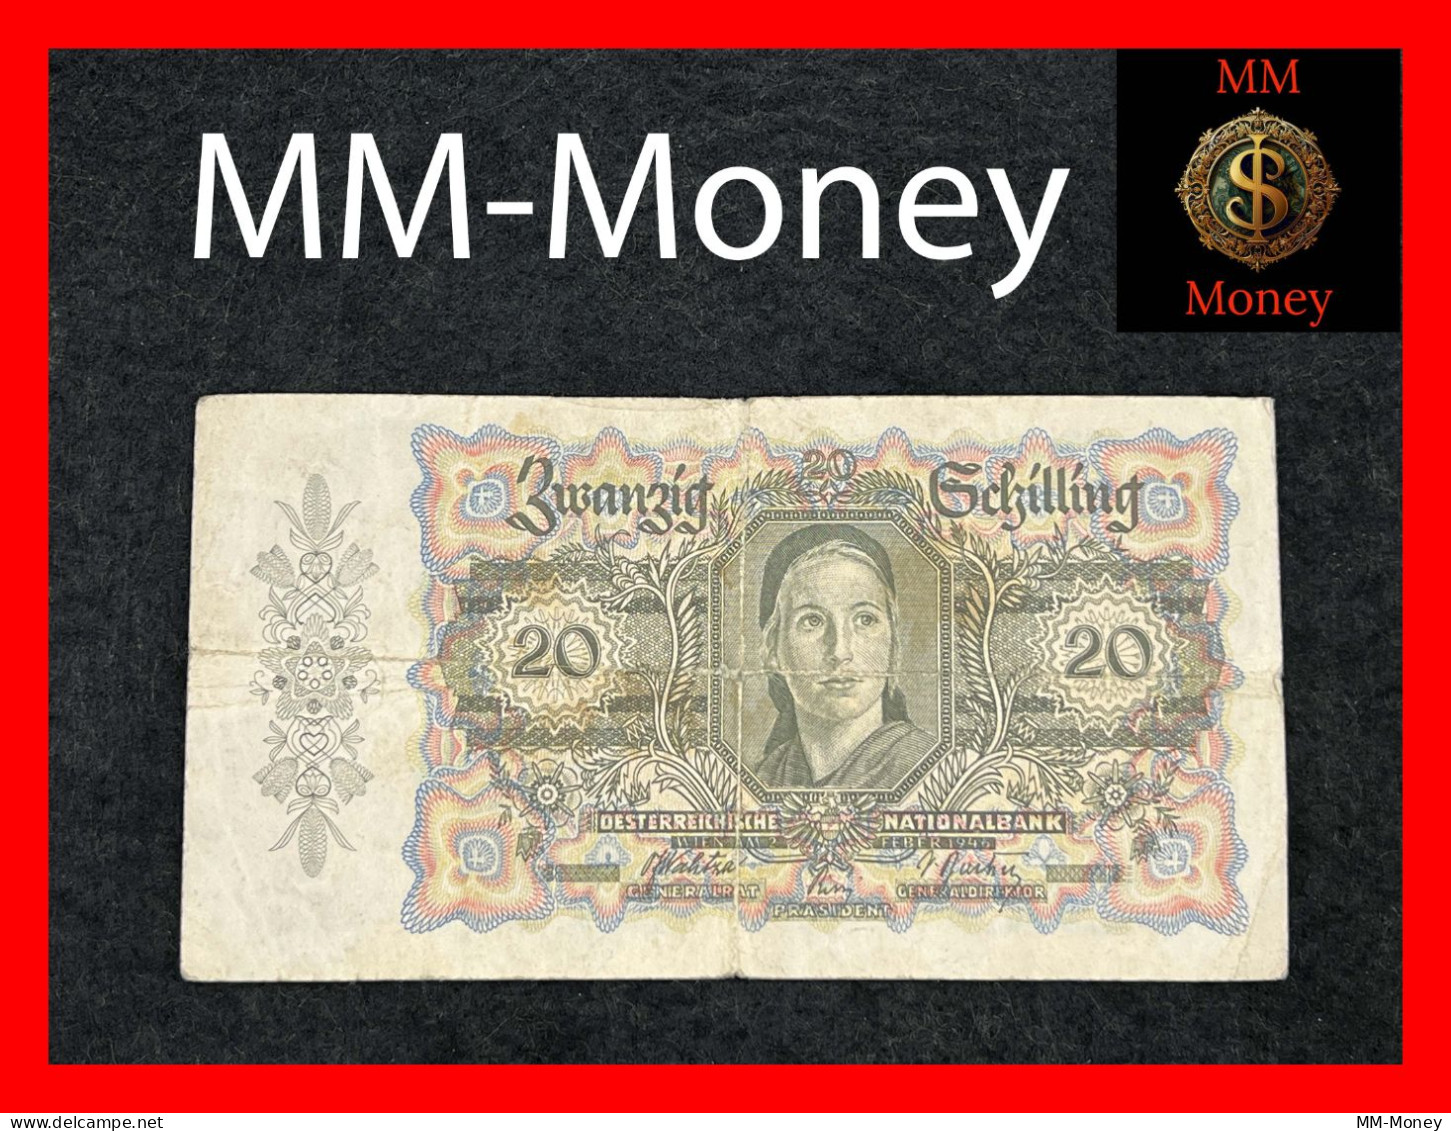 AUSTRIA  20 Schilling  2.2.1946  P. 123  *scarce*   VF   [MM-Money] - Austria